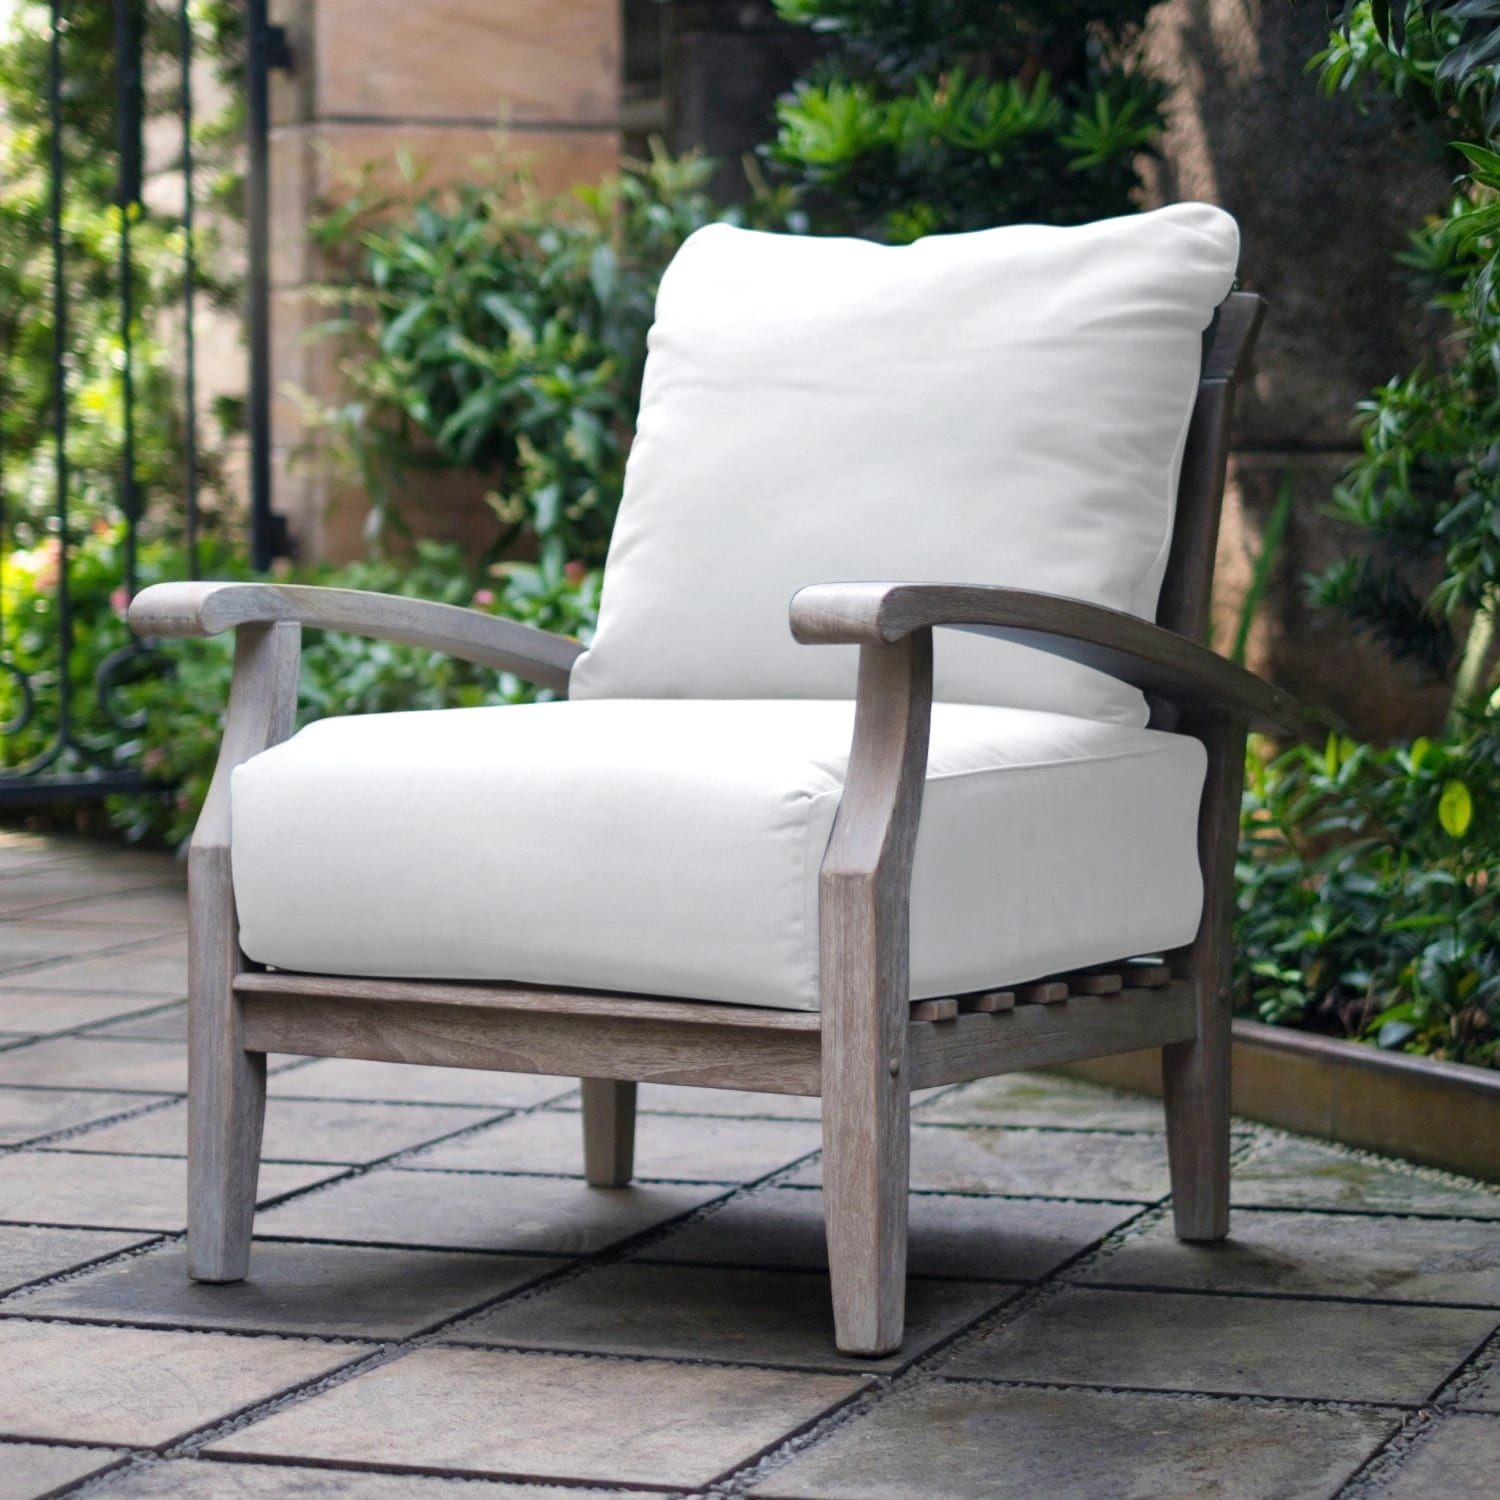 Cambridge Casual Leon Teak Patio Lounge Chair With Cushion